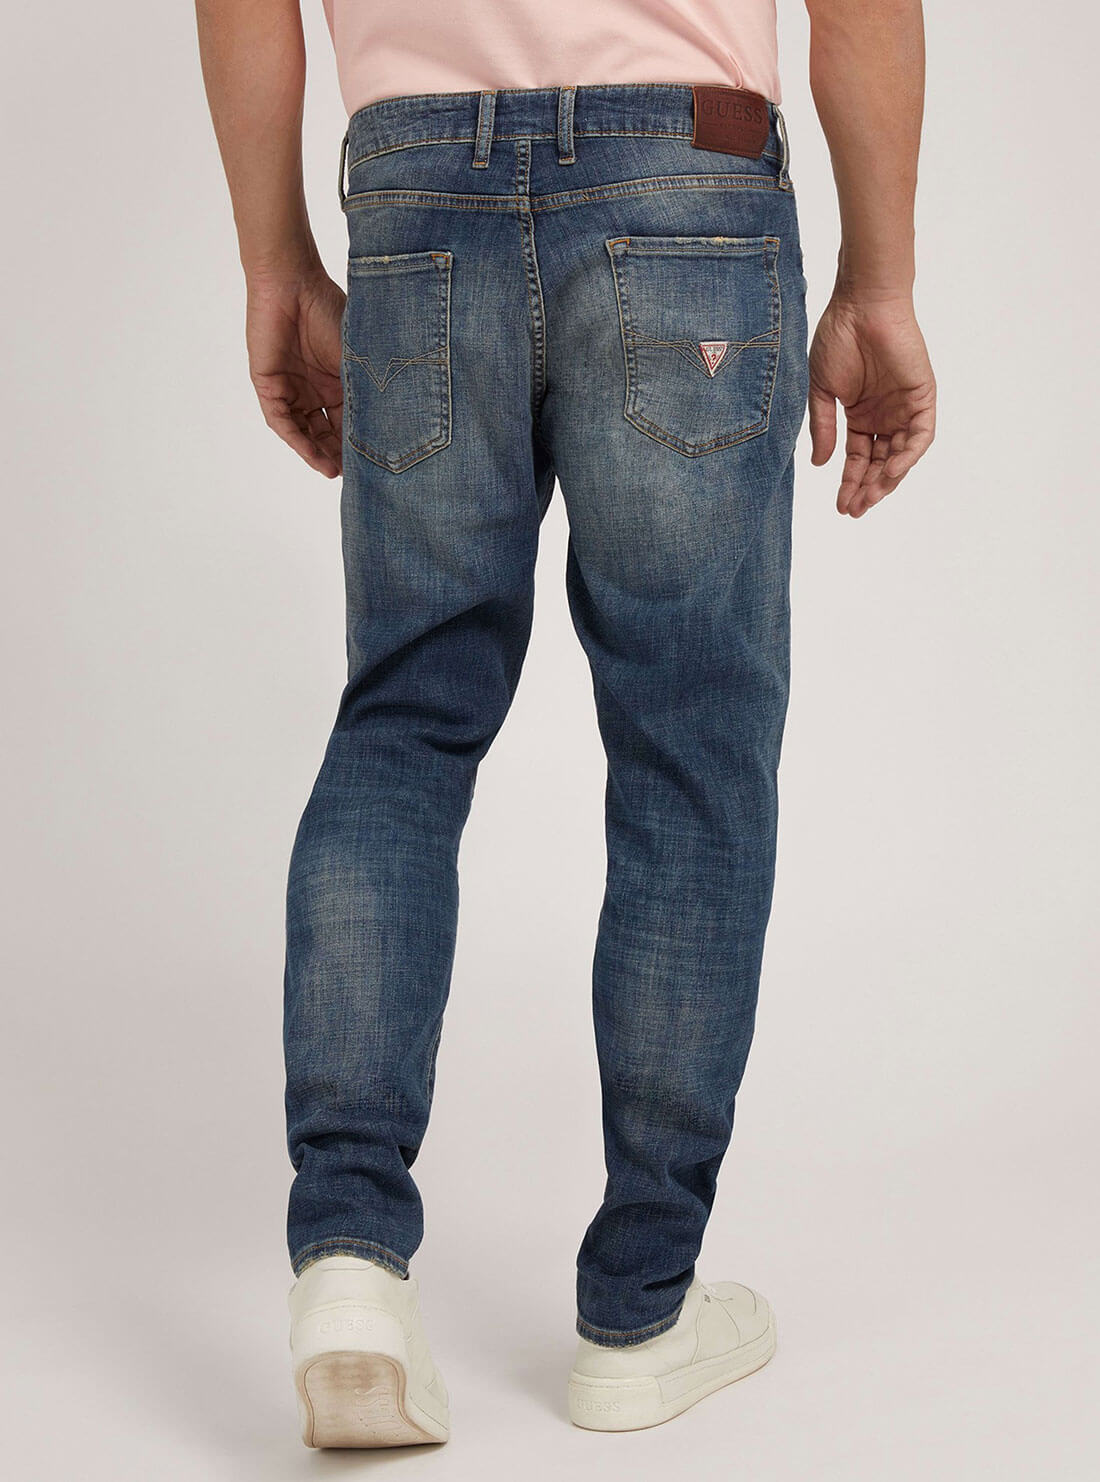 GUESS Mens Mid-Rise Regular Tapered Drake Denim Jeans in Reeno Wash M2GA37D4G23 Back View